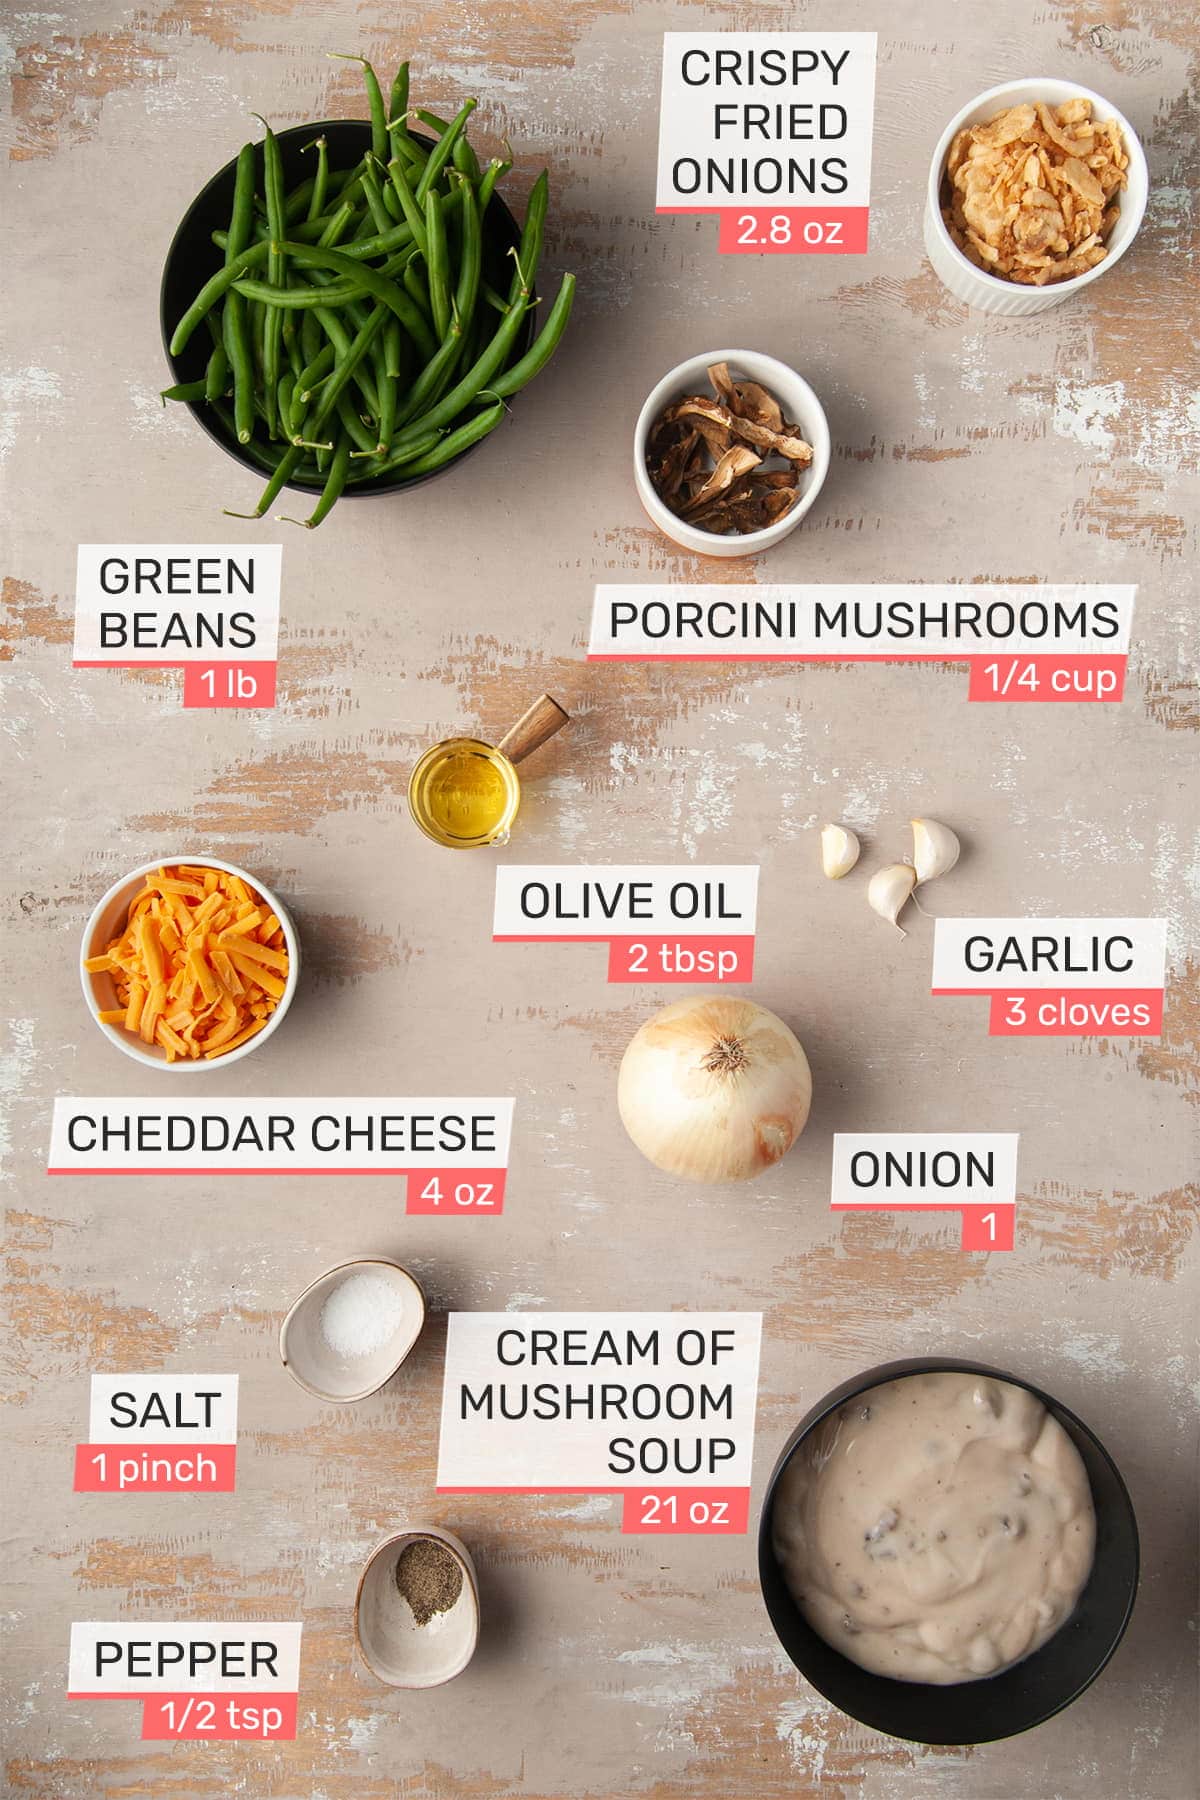 green beans, porcini mushrooms, cheddar cheese, olive oil, garlic, onion, salt, cream of mushroom soup, black pepper